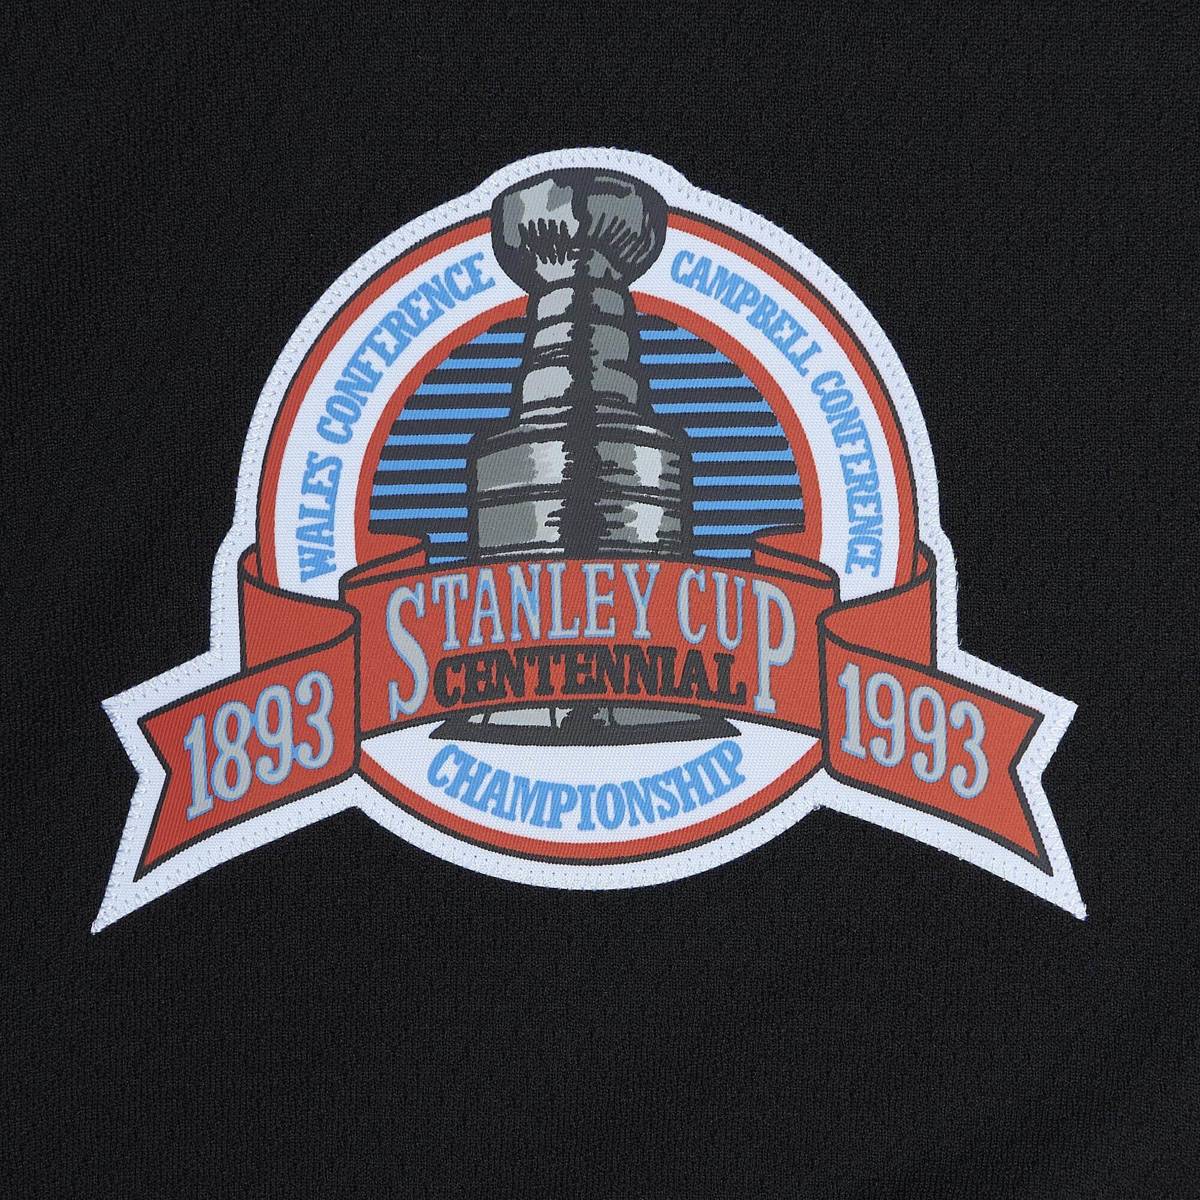 Mitchell & Ness Los Angeles Kings #99 Wayne Gretzky NHL Dark Jersey black